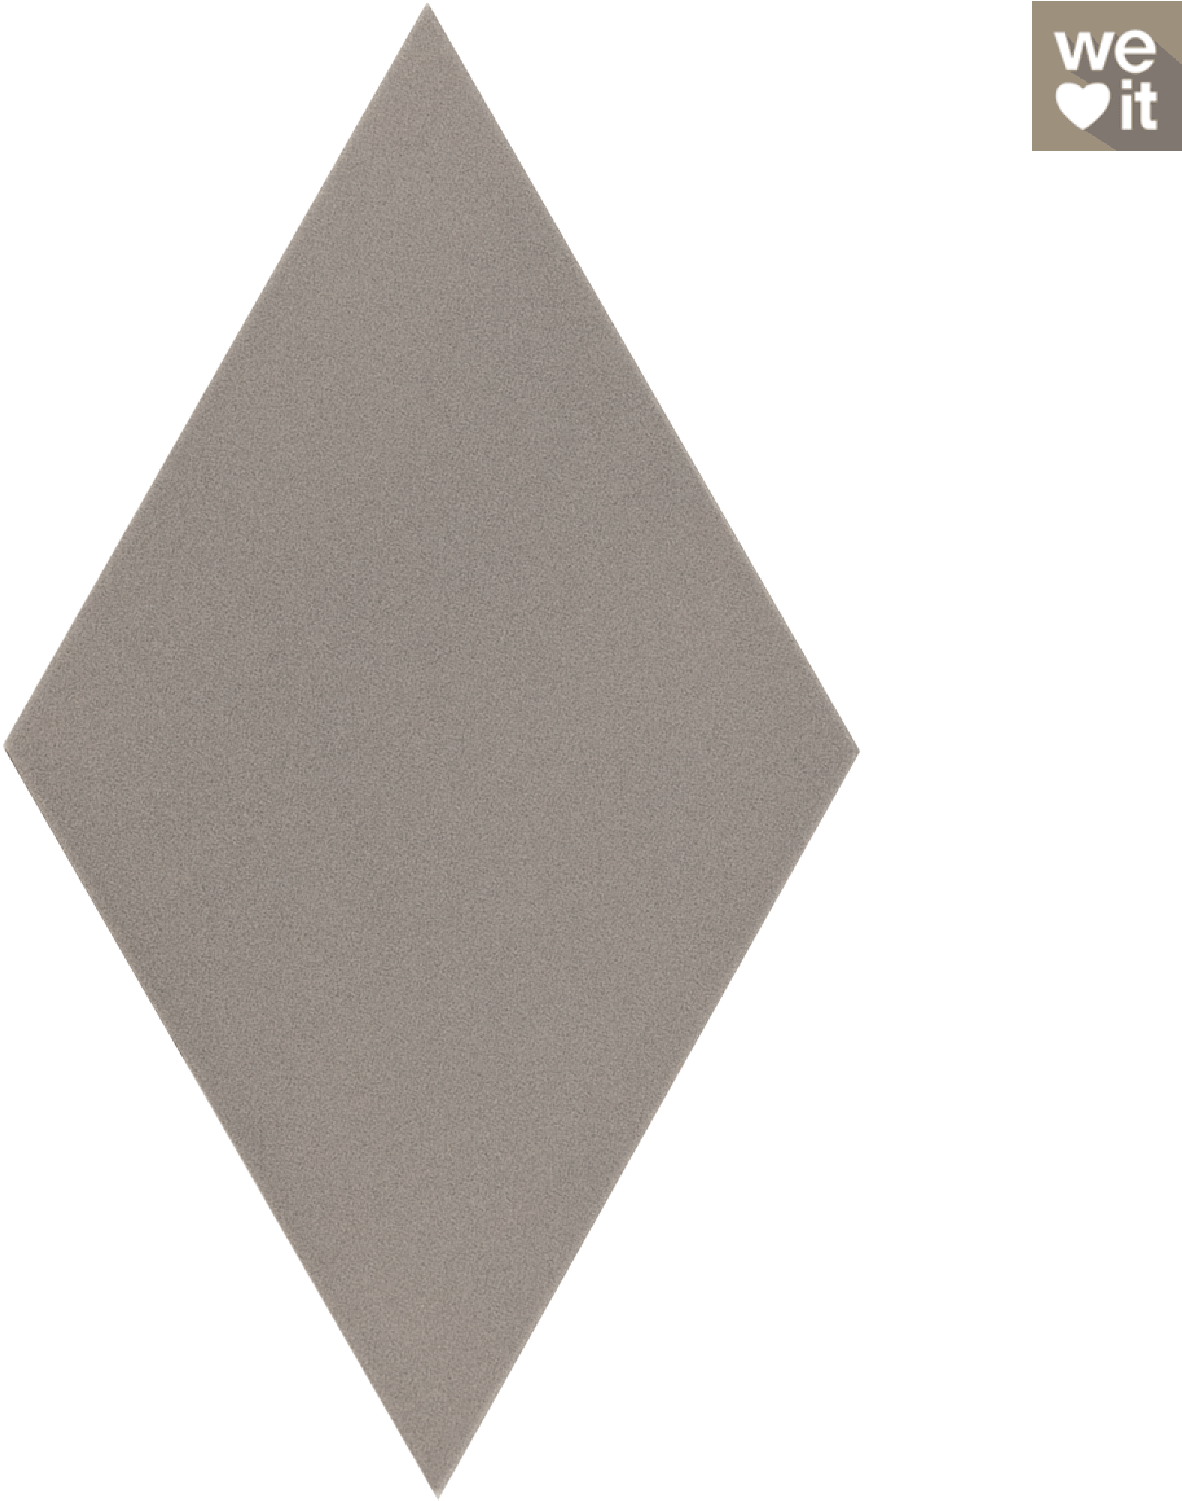 A Diamond Shaped Object On A Black Background